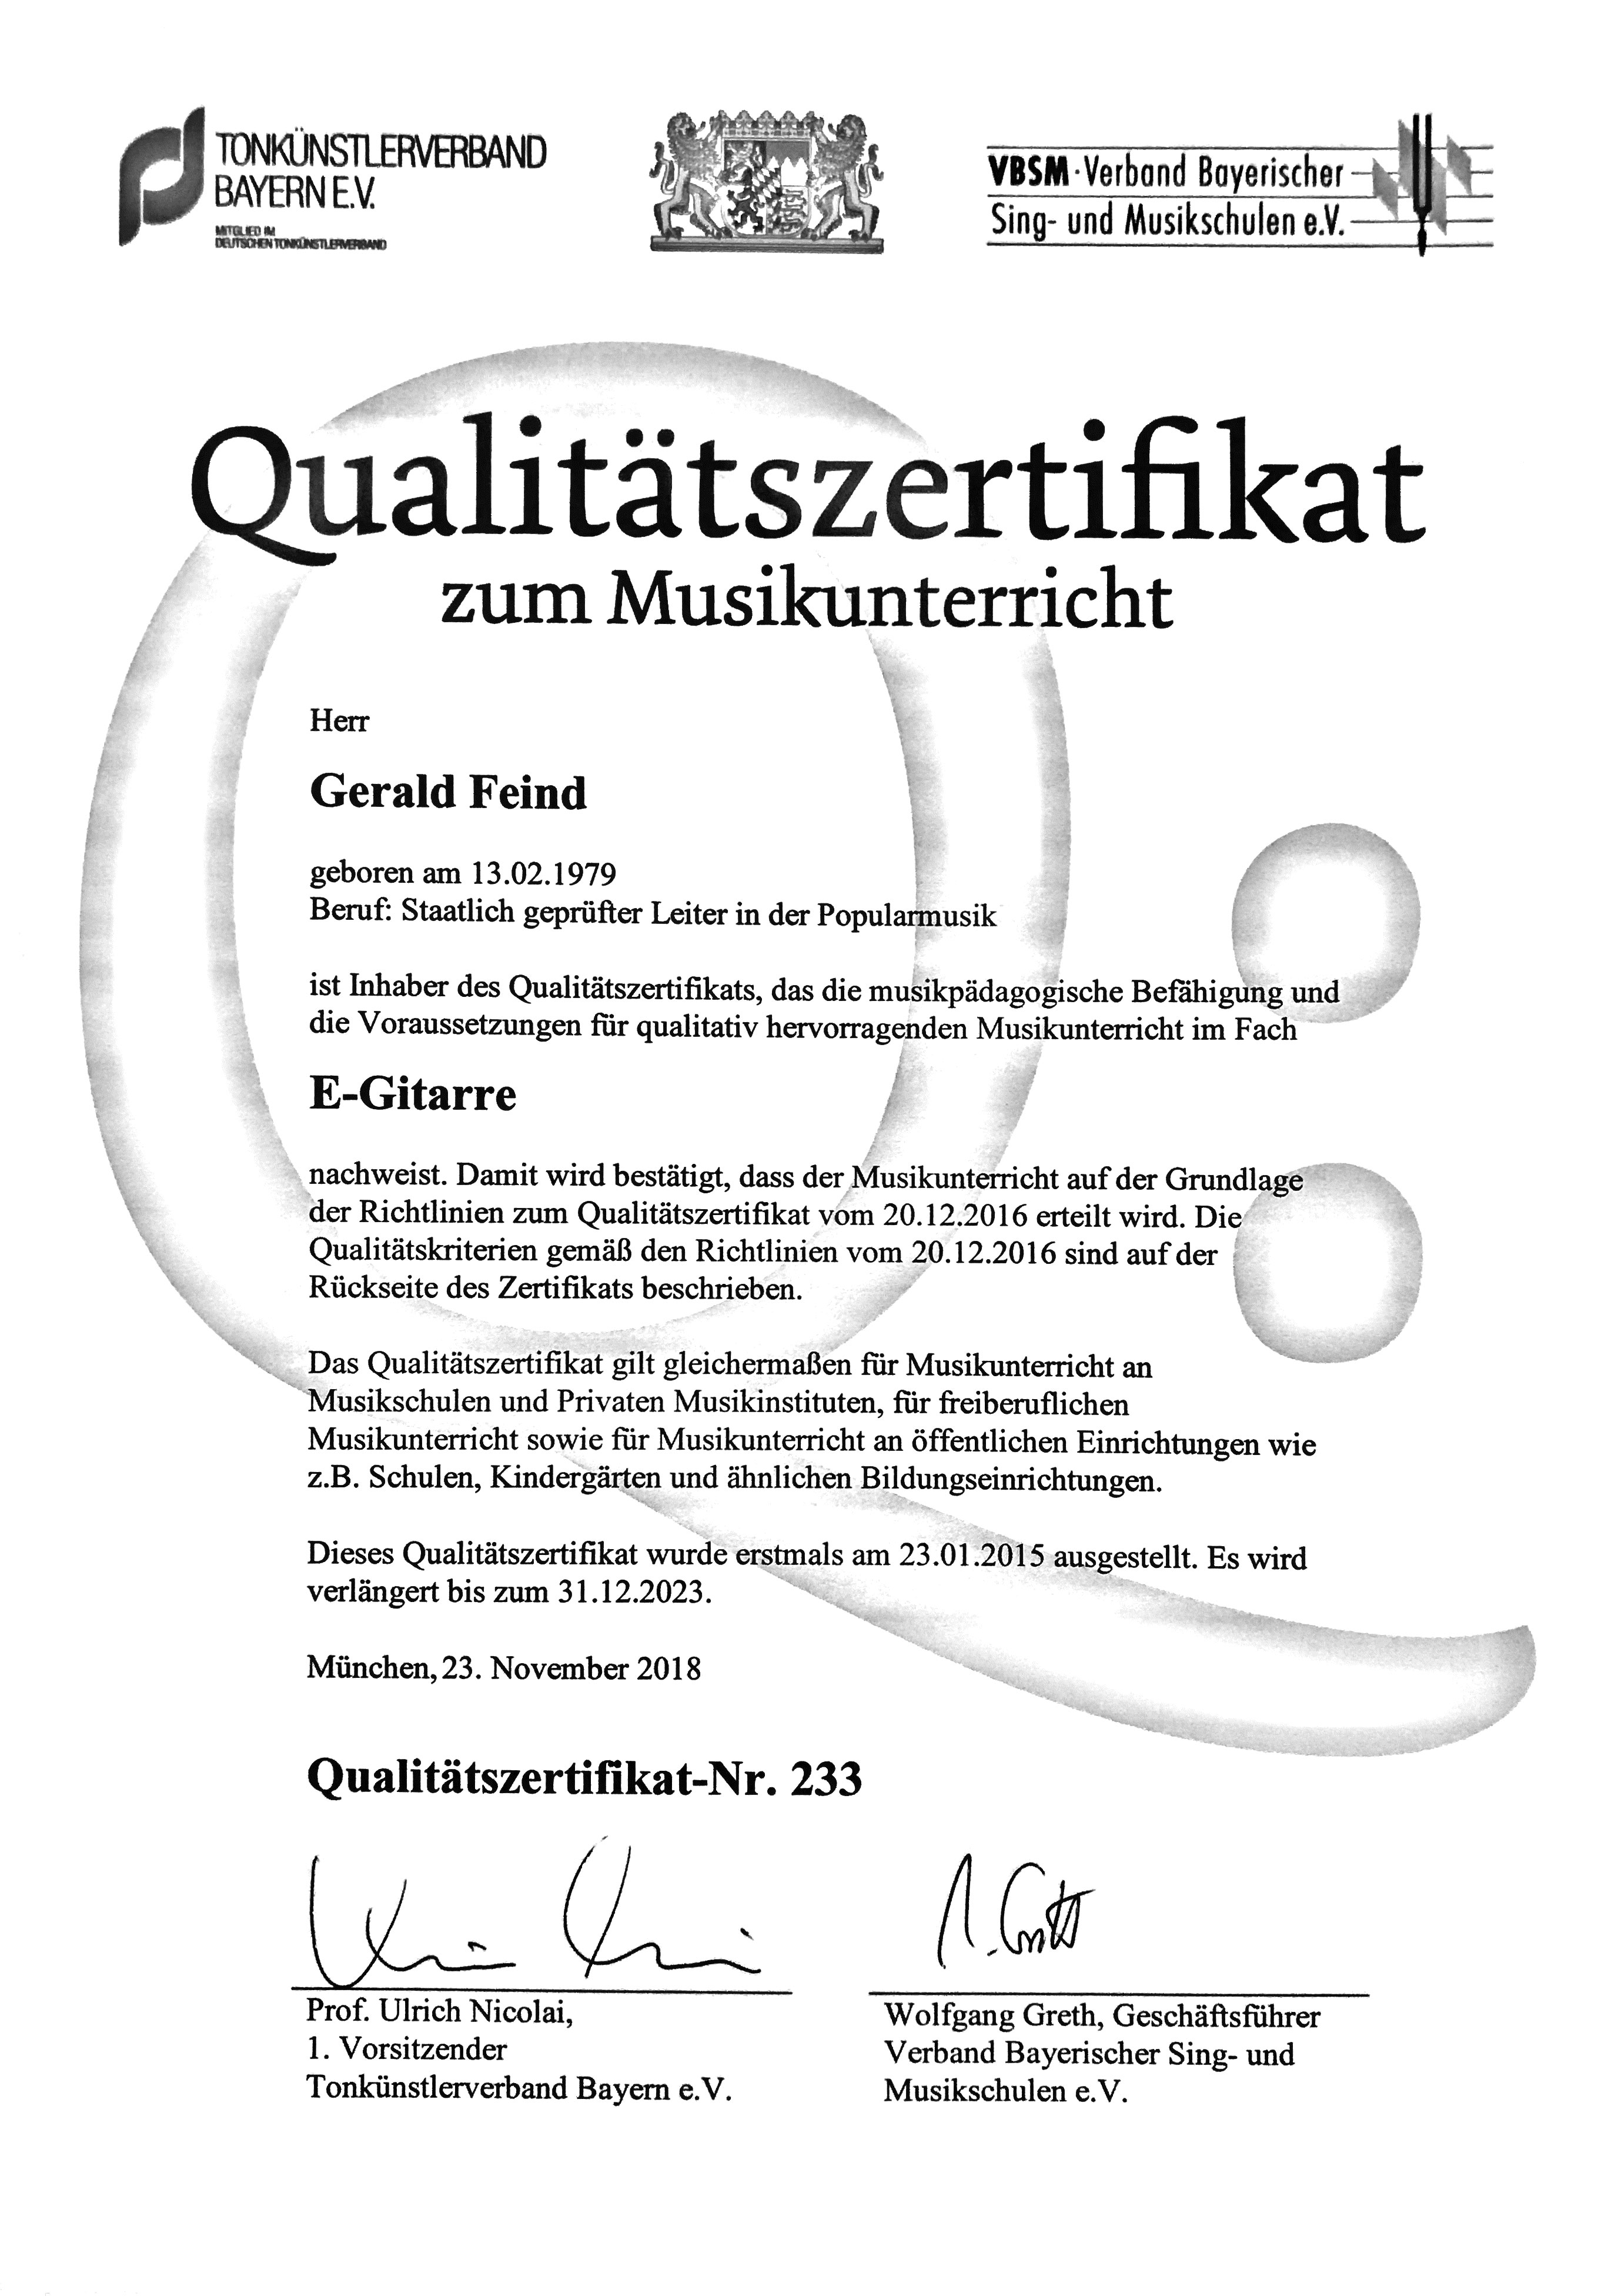 Qualitätszertifikat Tonkünstlerverband Bayern eV 2019